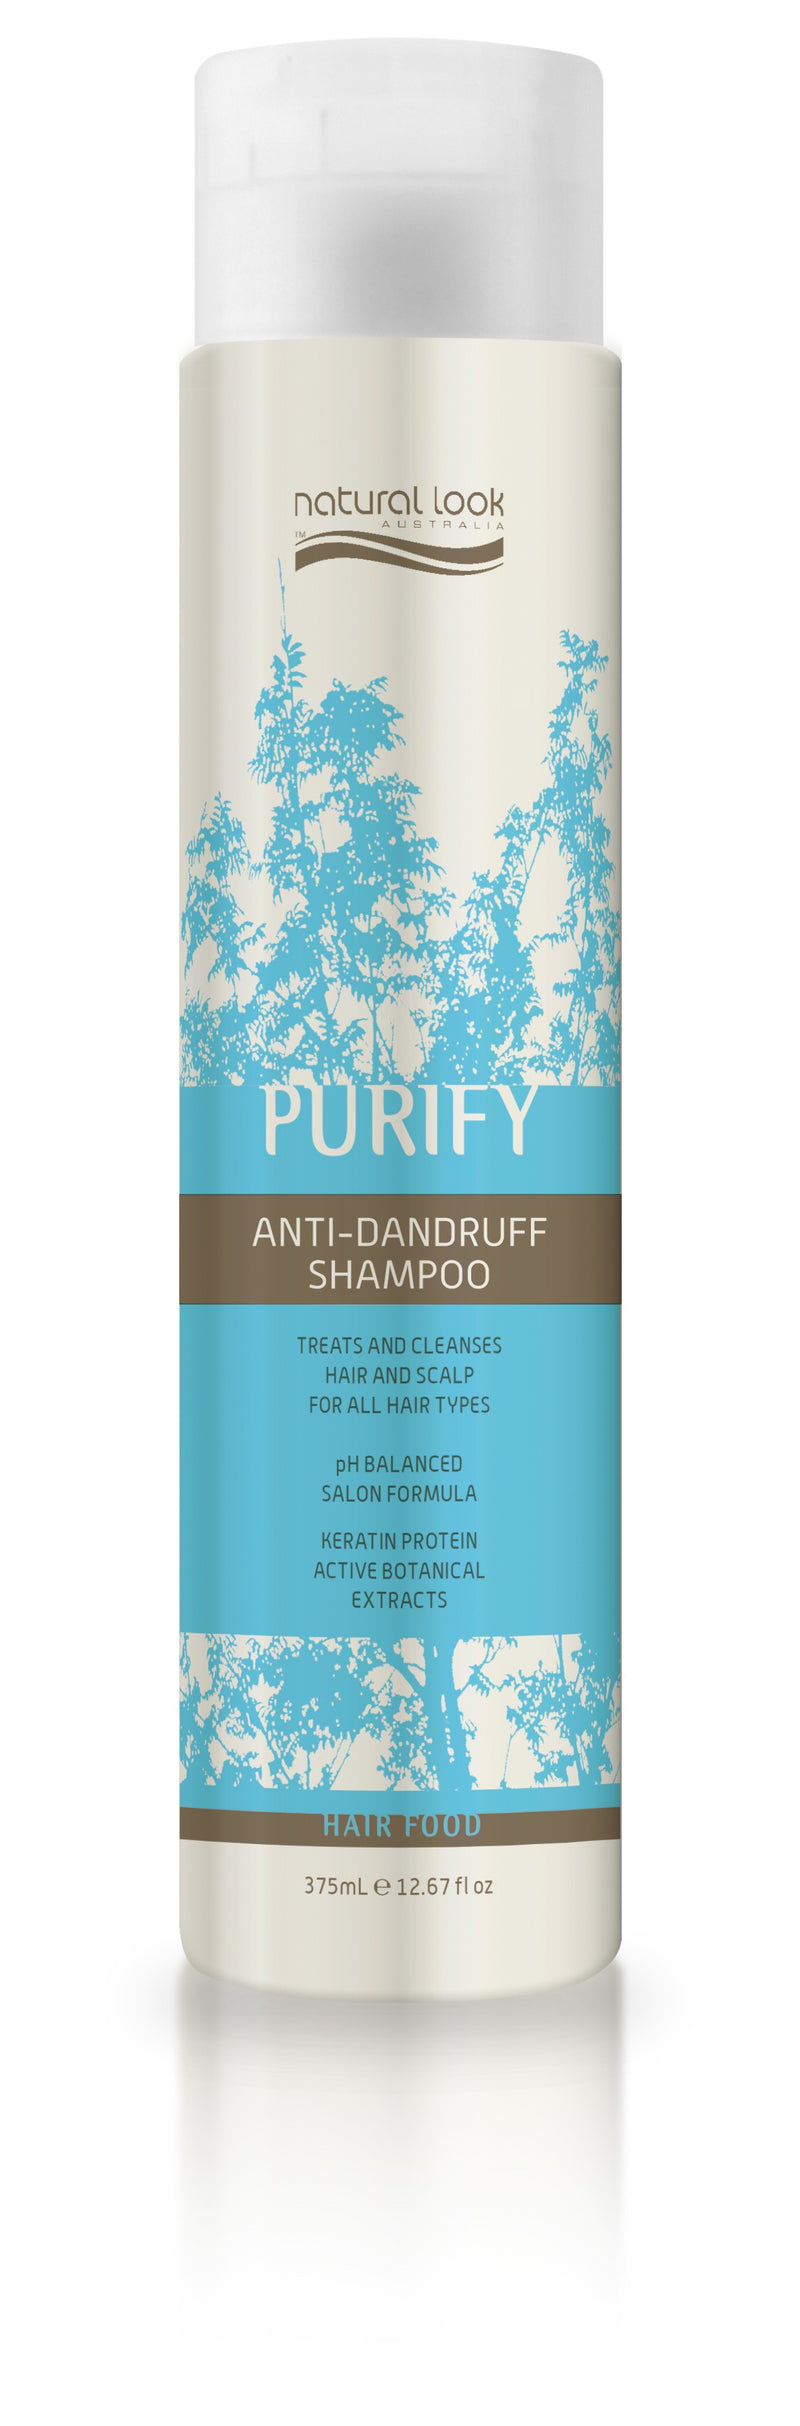 Natural Look Purify Anti-Dandruff Shampoo 375ml